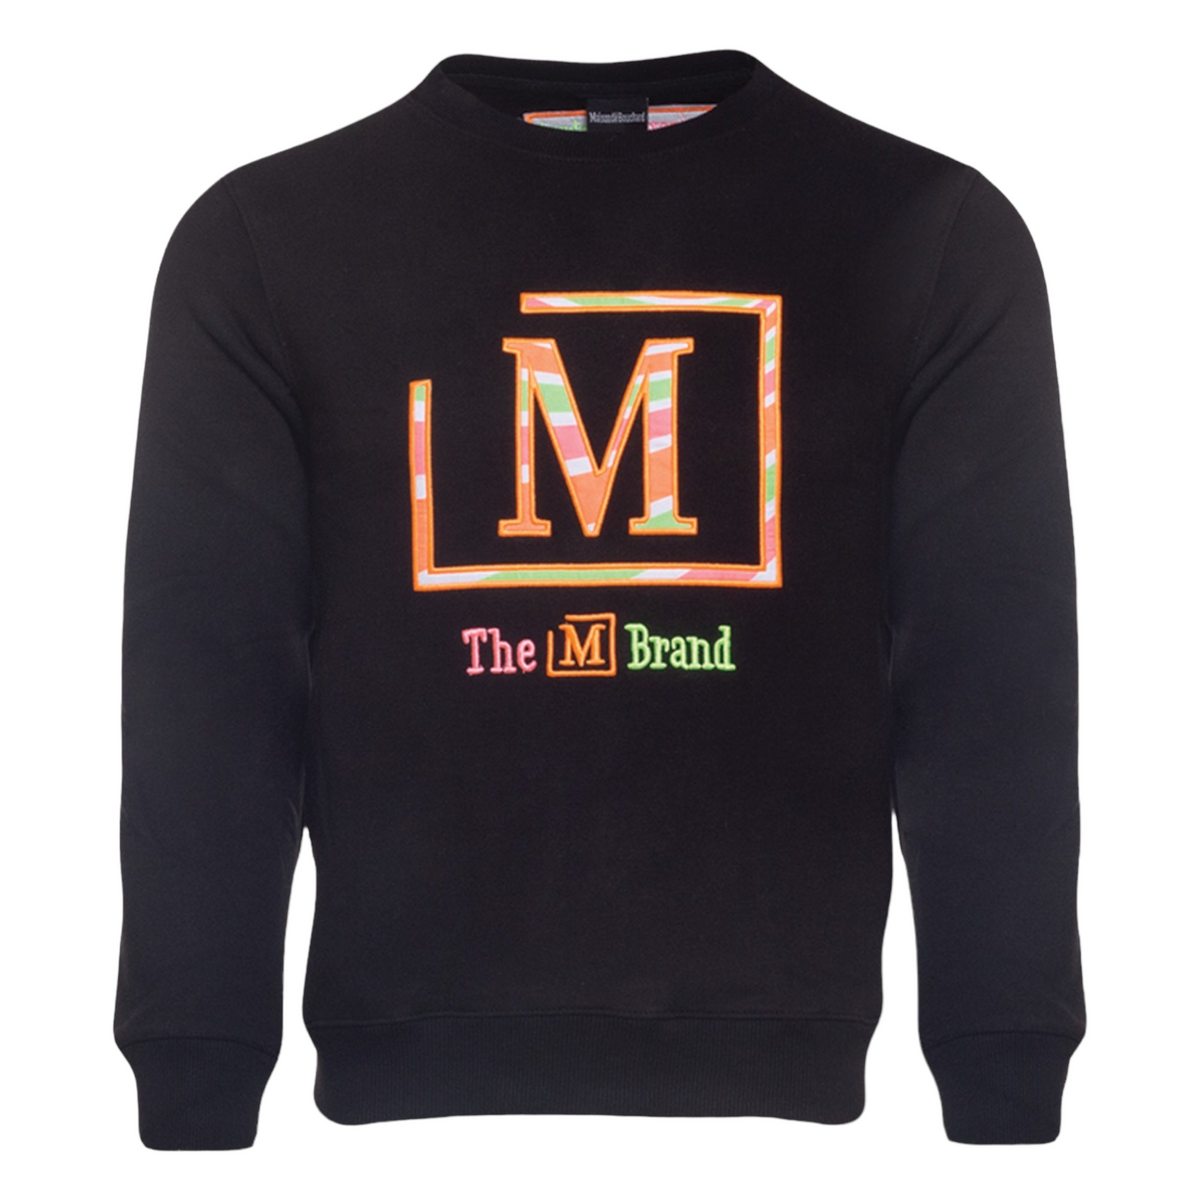 MDB Brand Men's "The M Brand" Swirl Crewneck Sweatshirt - Black